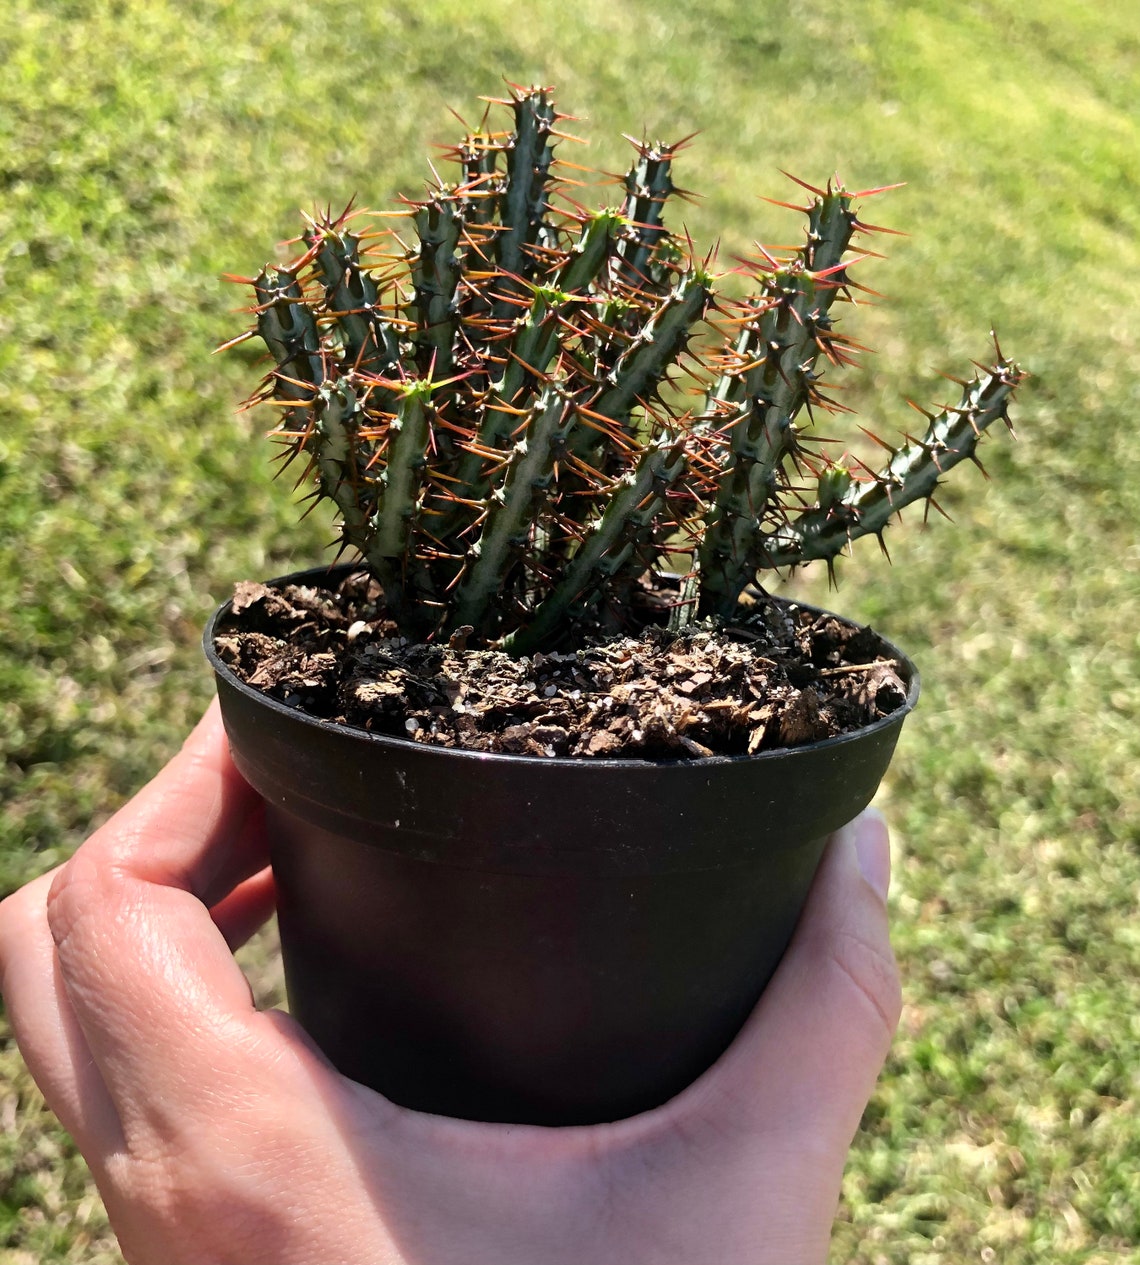 Pincushion Euphorbia Live Plant Rare Cactus | Etsy